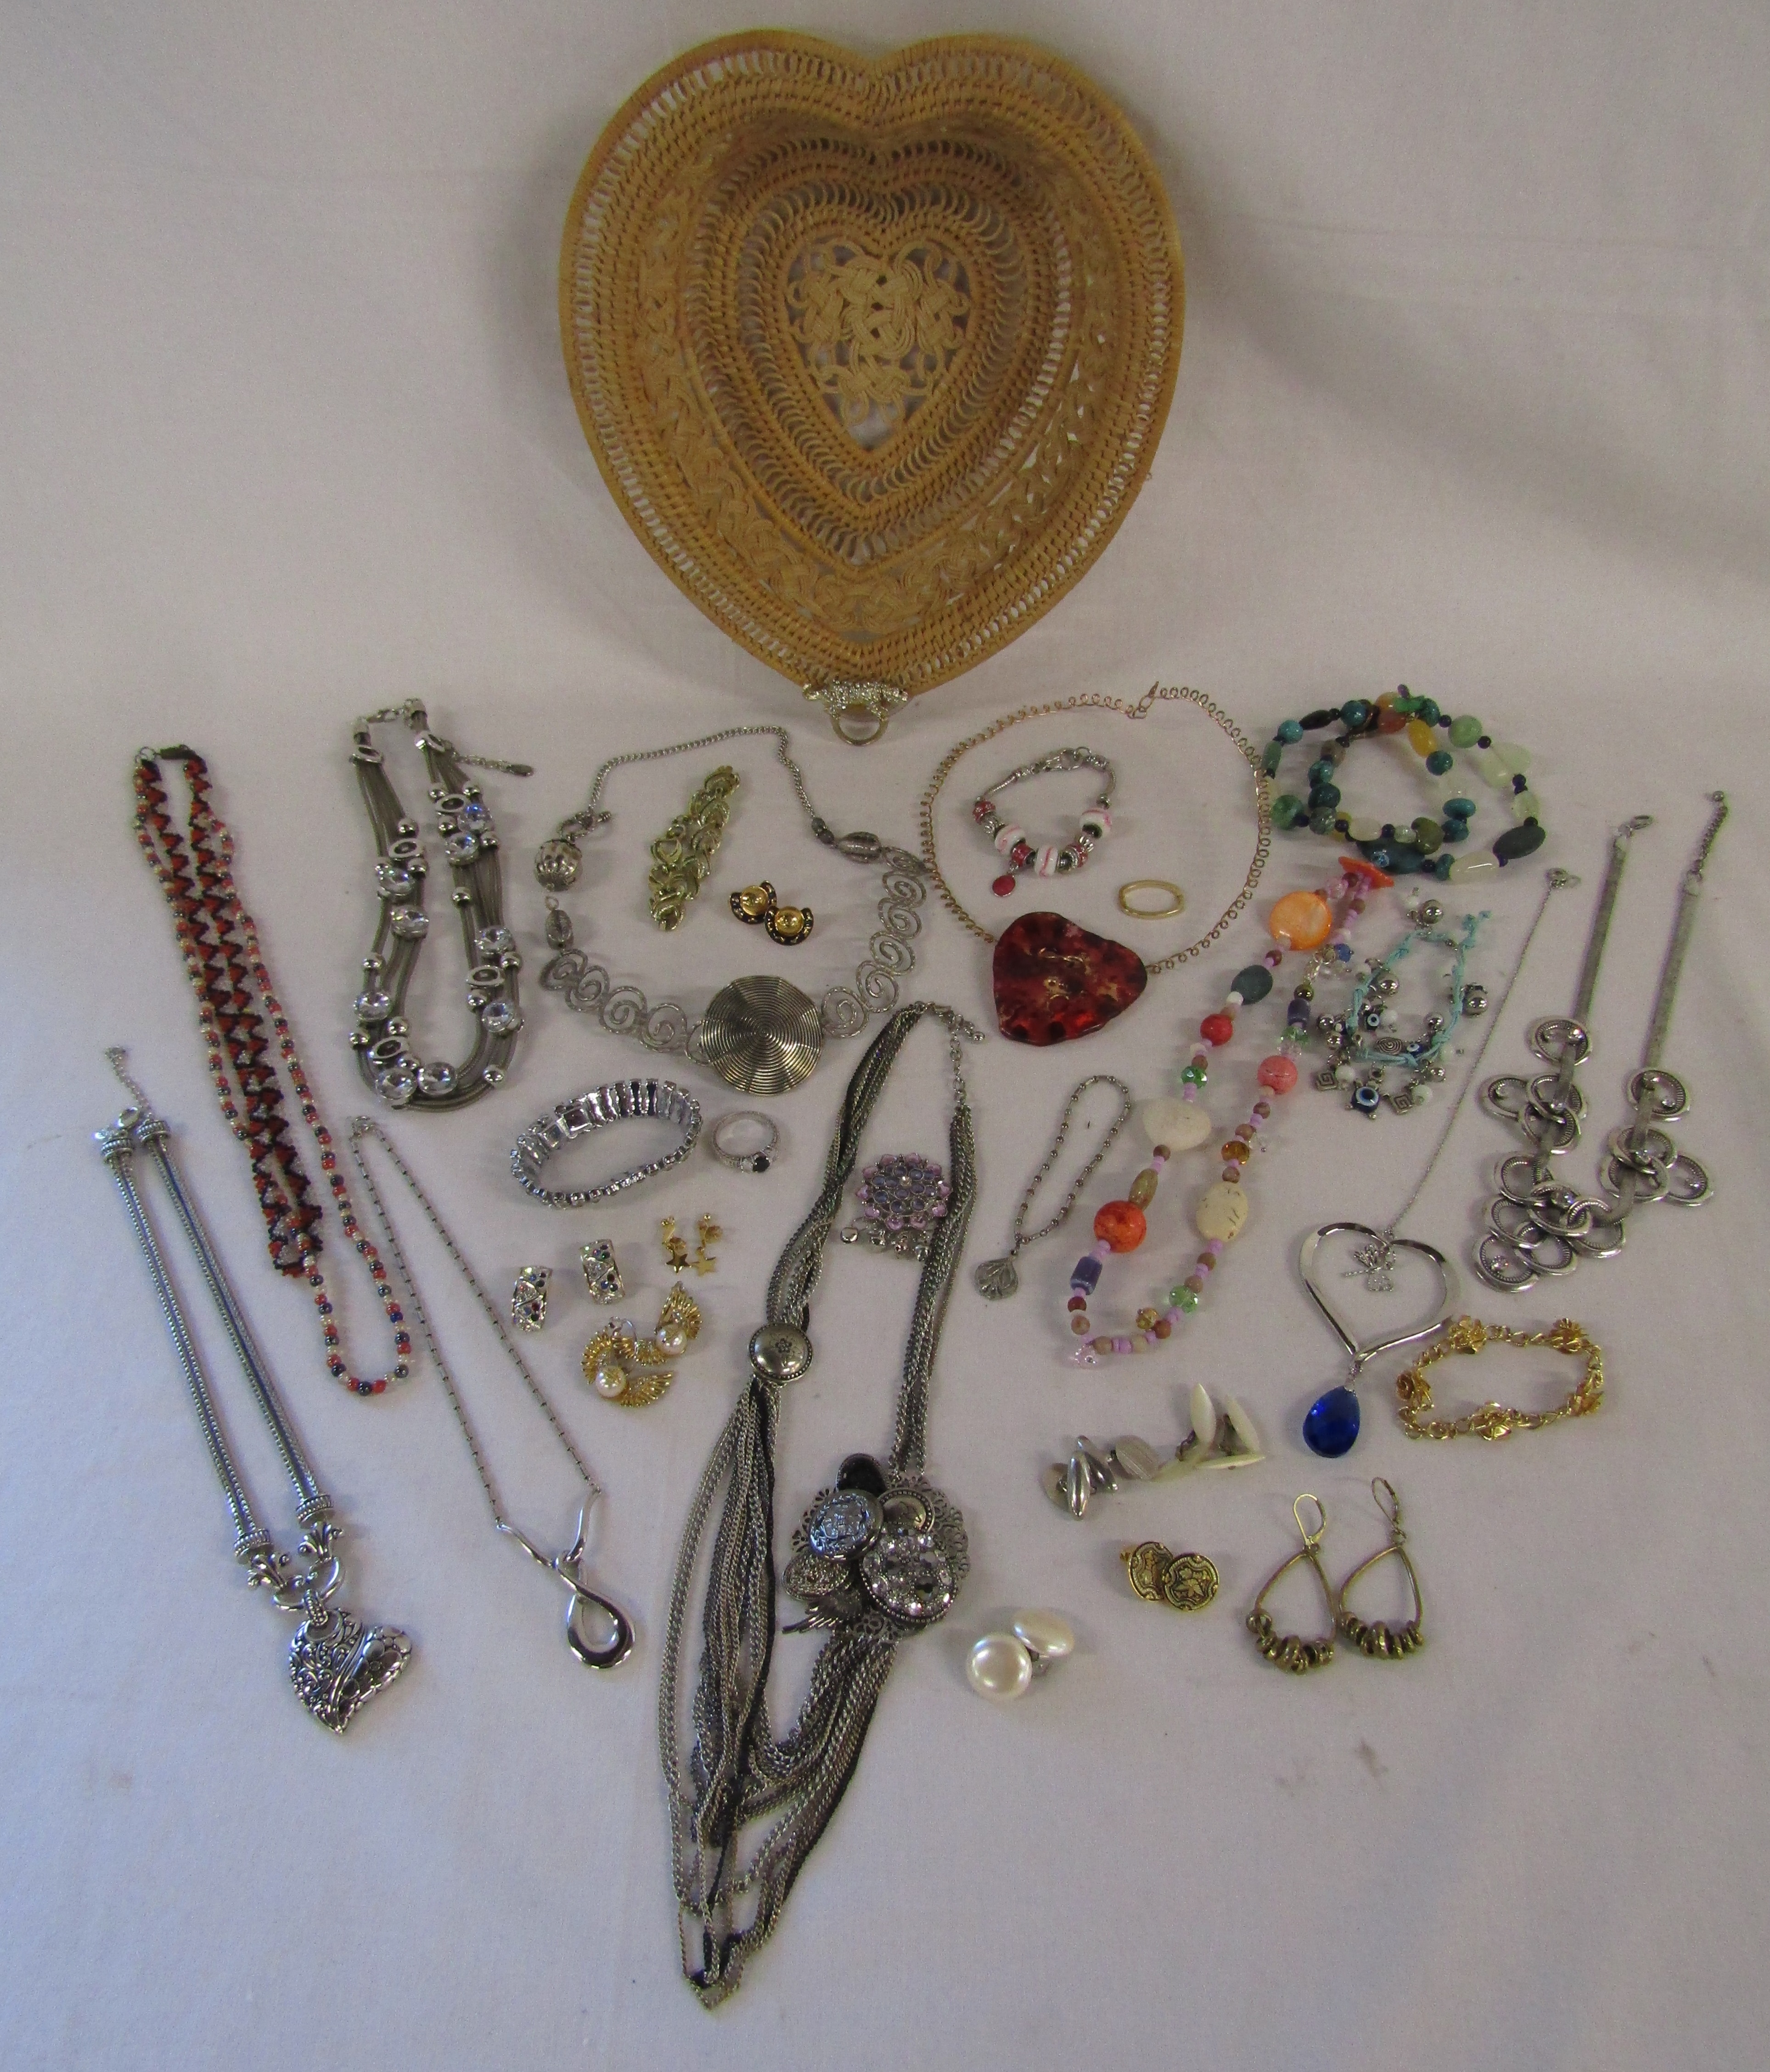 Selection of costume jewellery in a heart shaped wicker basket